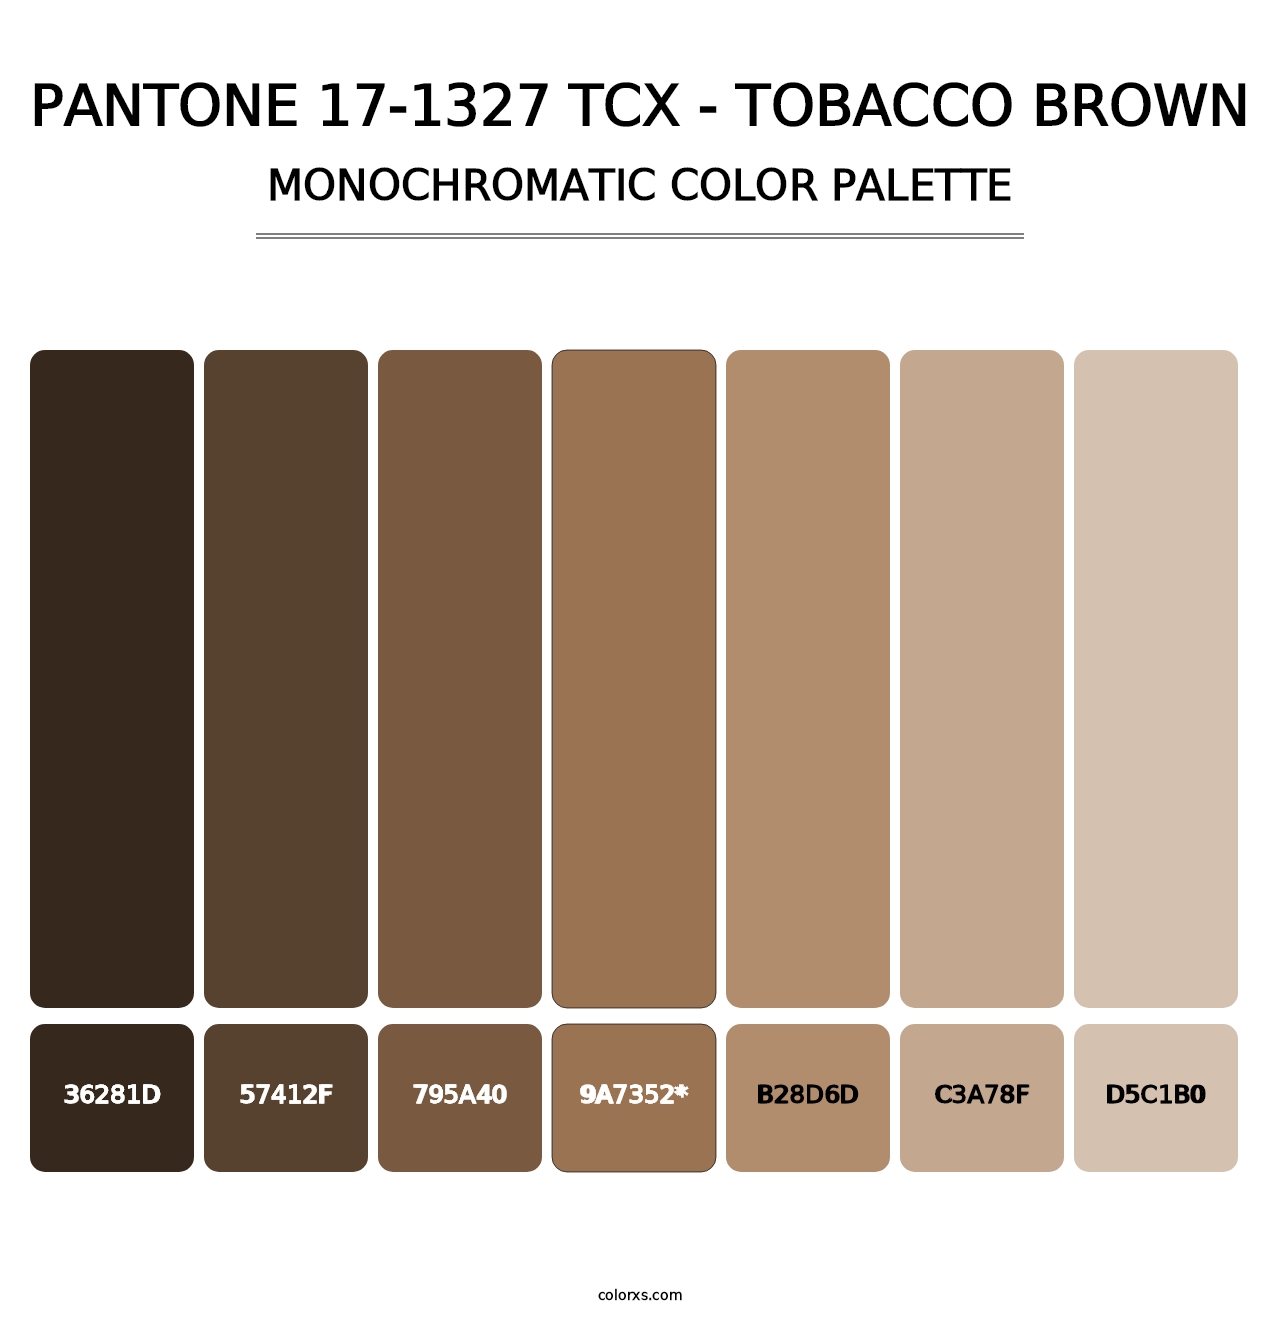 PANTONE 17-1327 TCX - Tobacco Brown - Monochromatic Color Palette